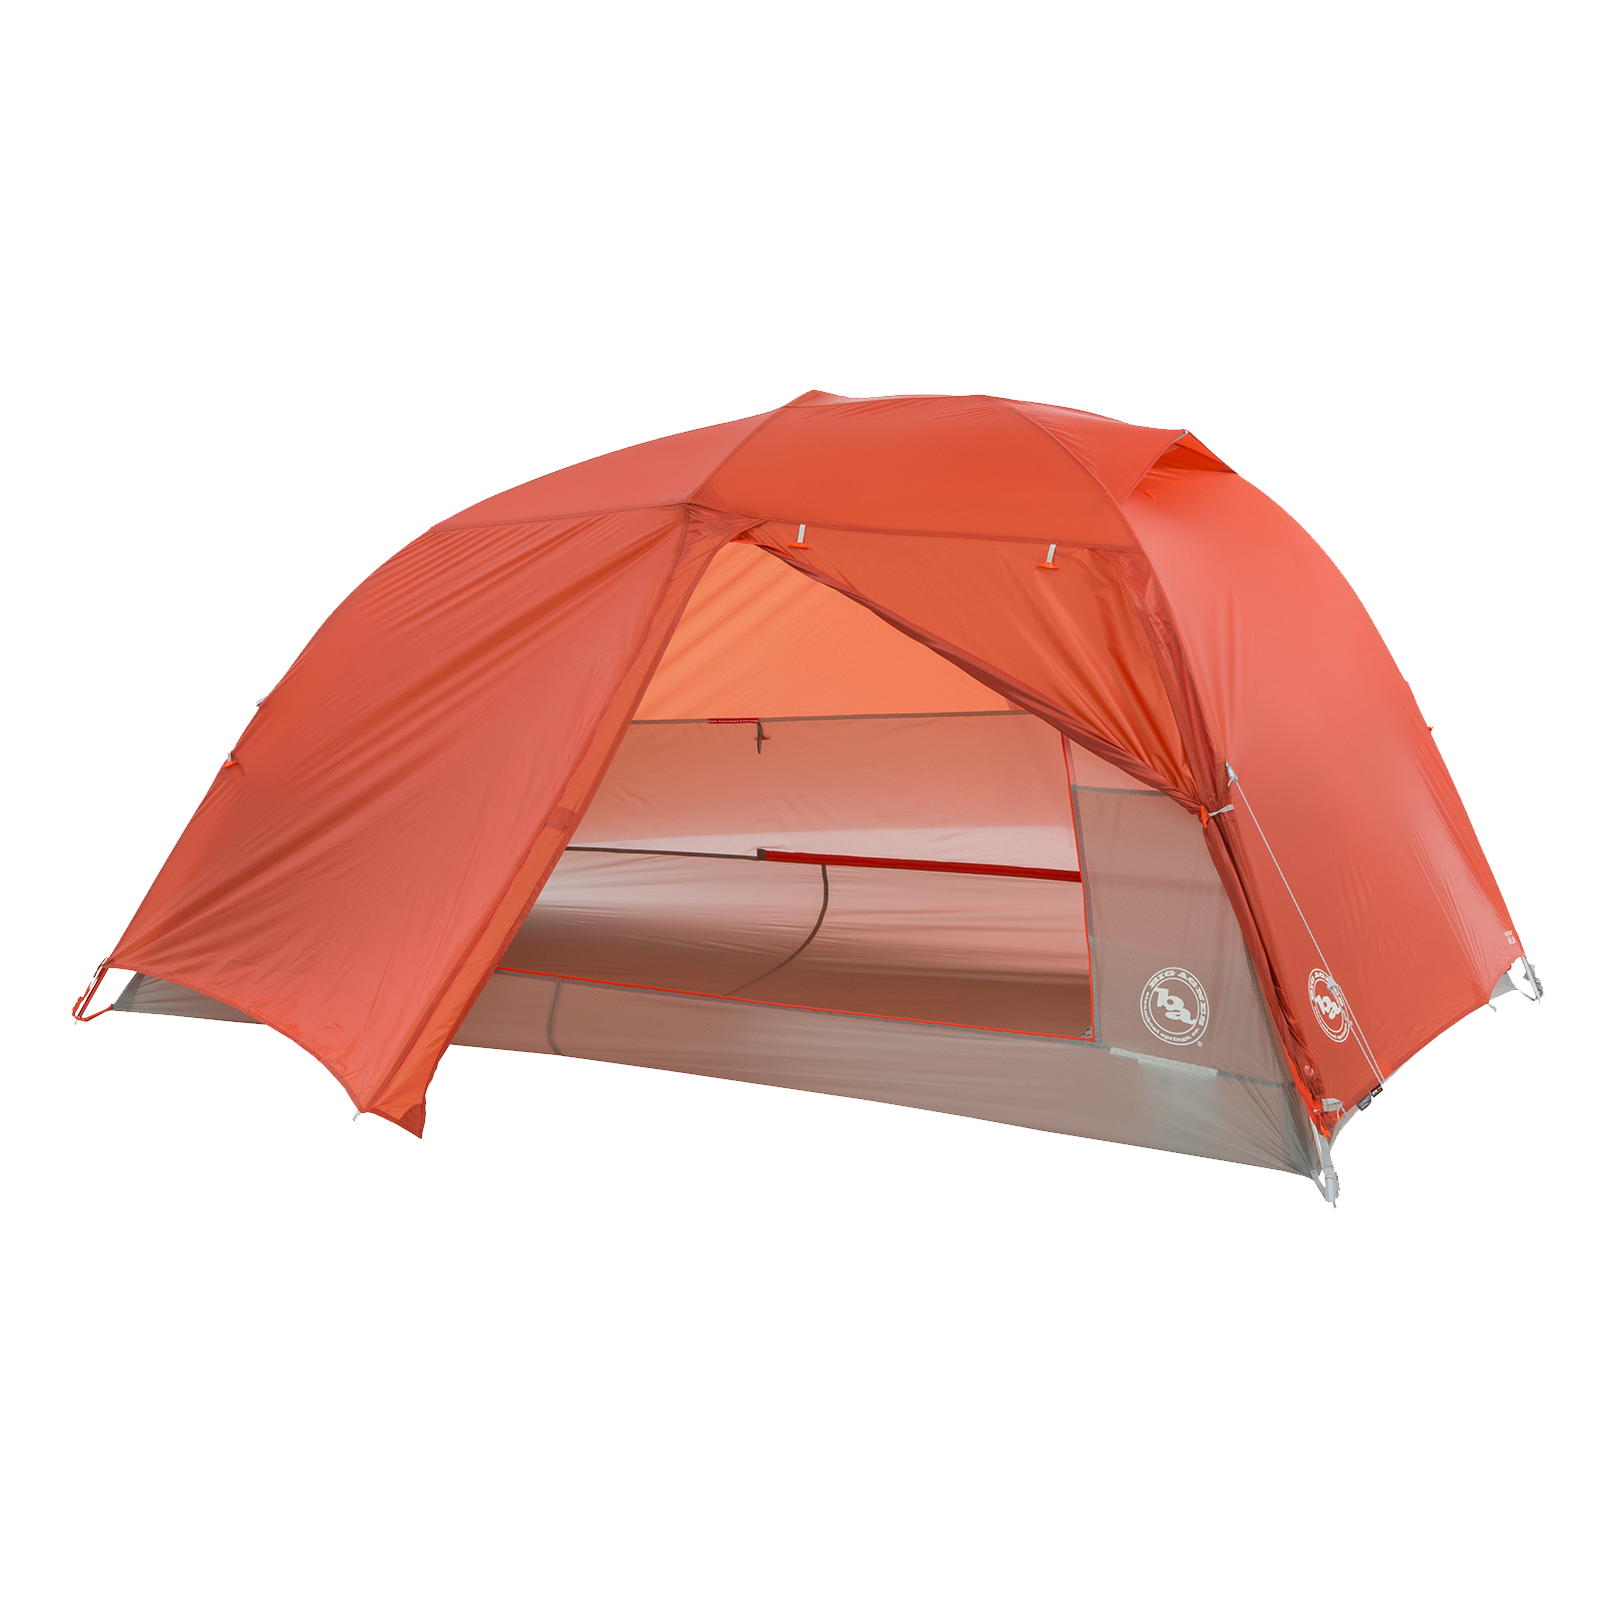 Copper Spur HV UL2 Ultralight Tent | Big Agnes